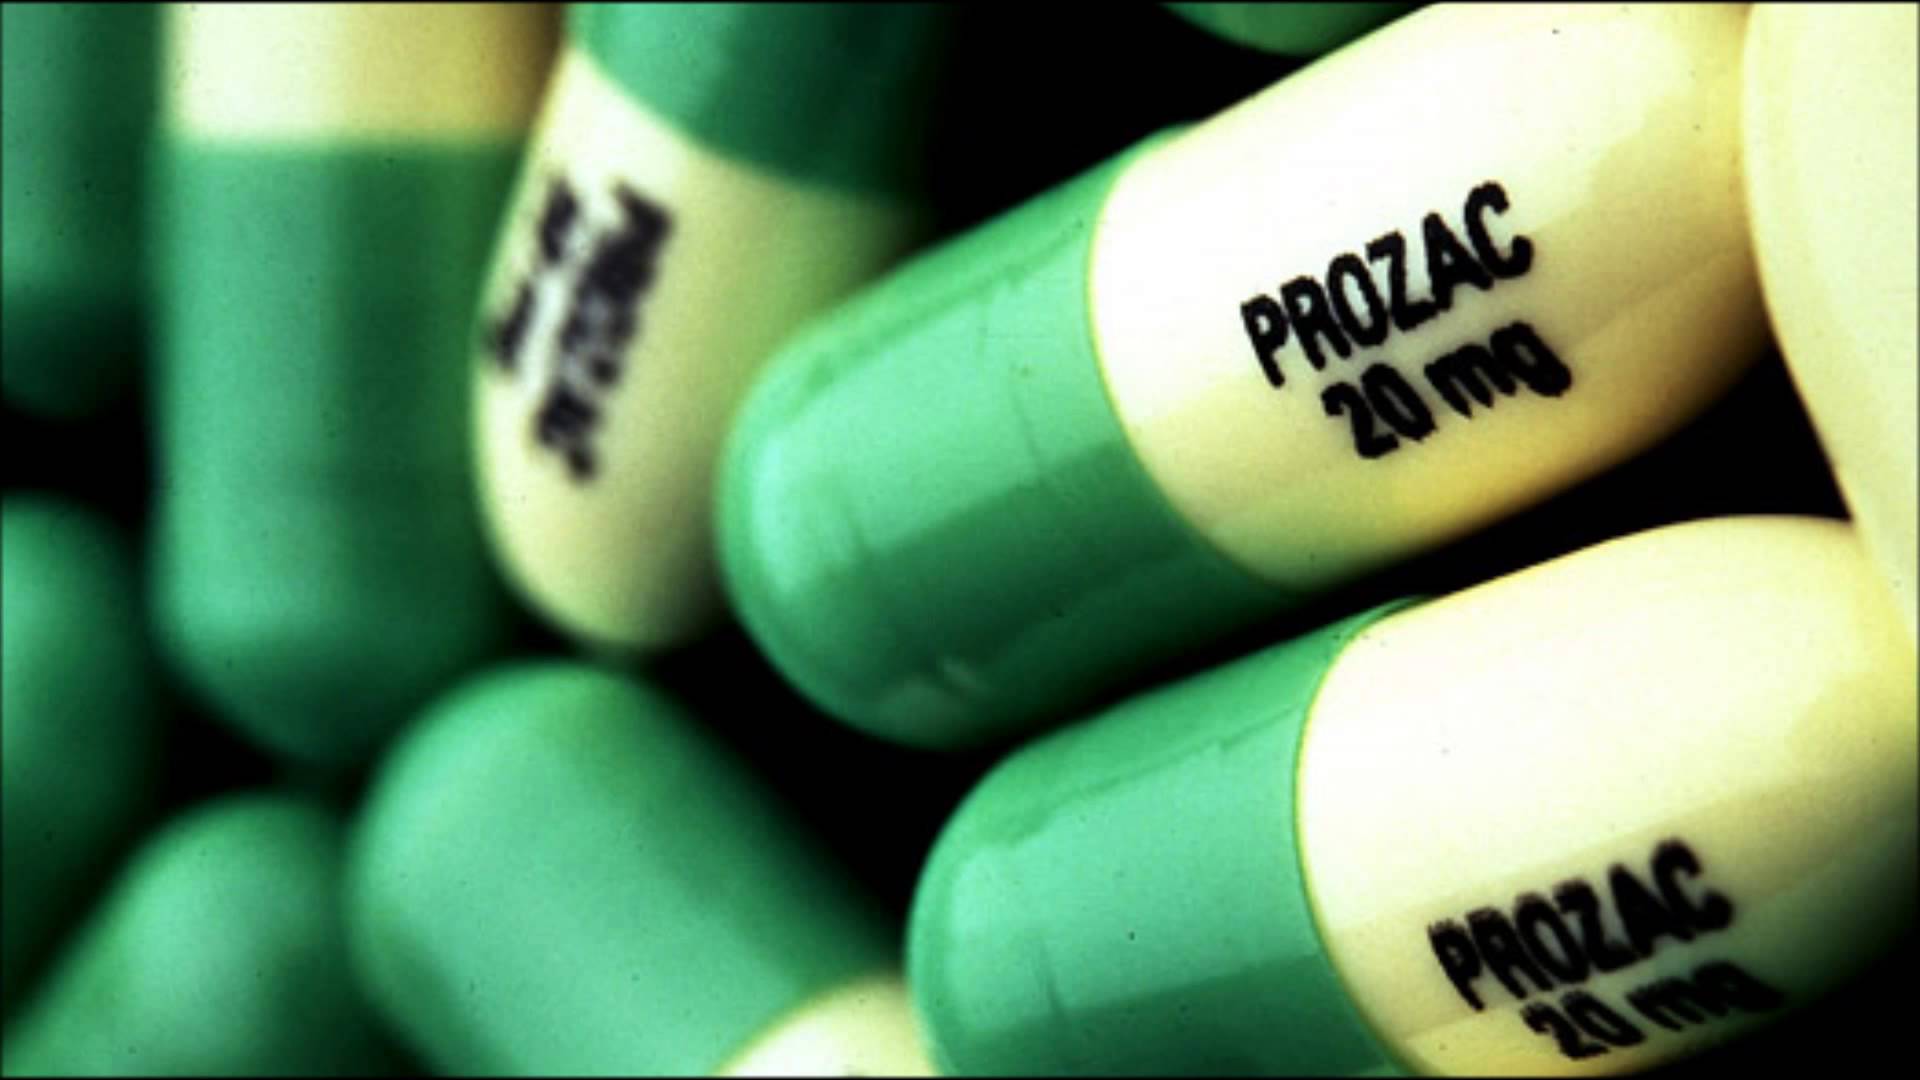 Side effects of Prozac